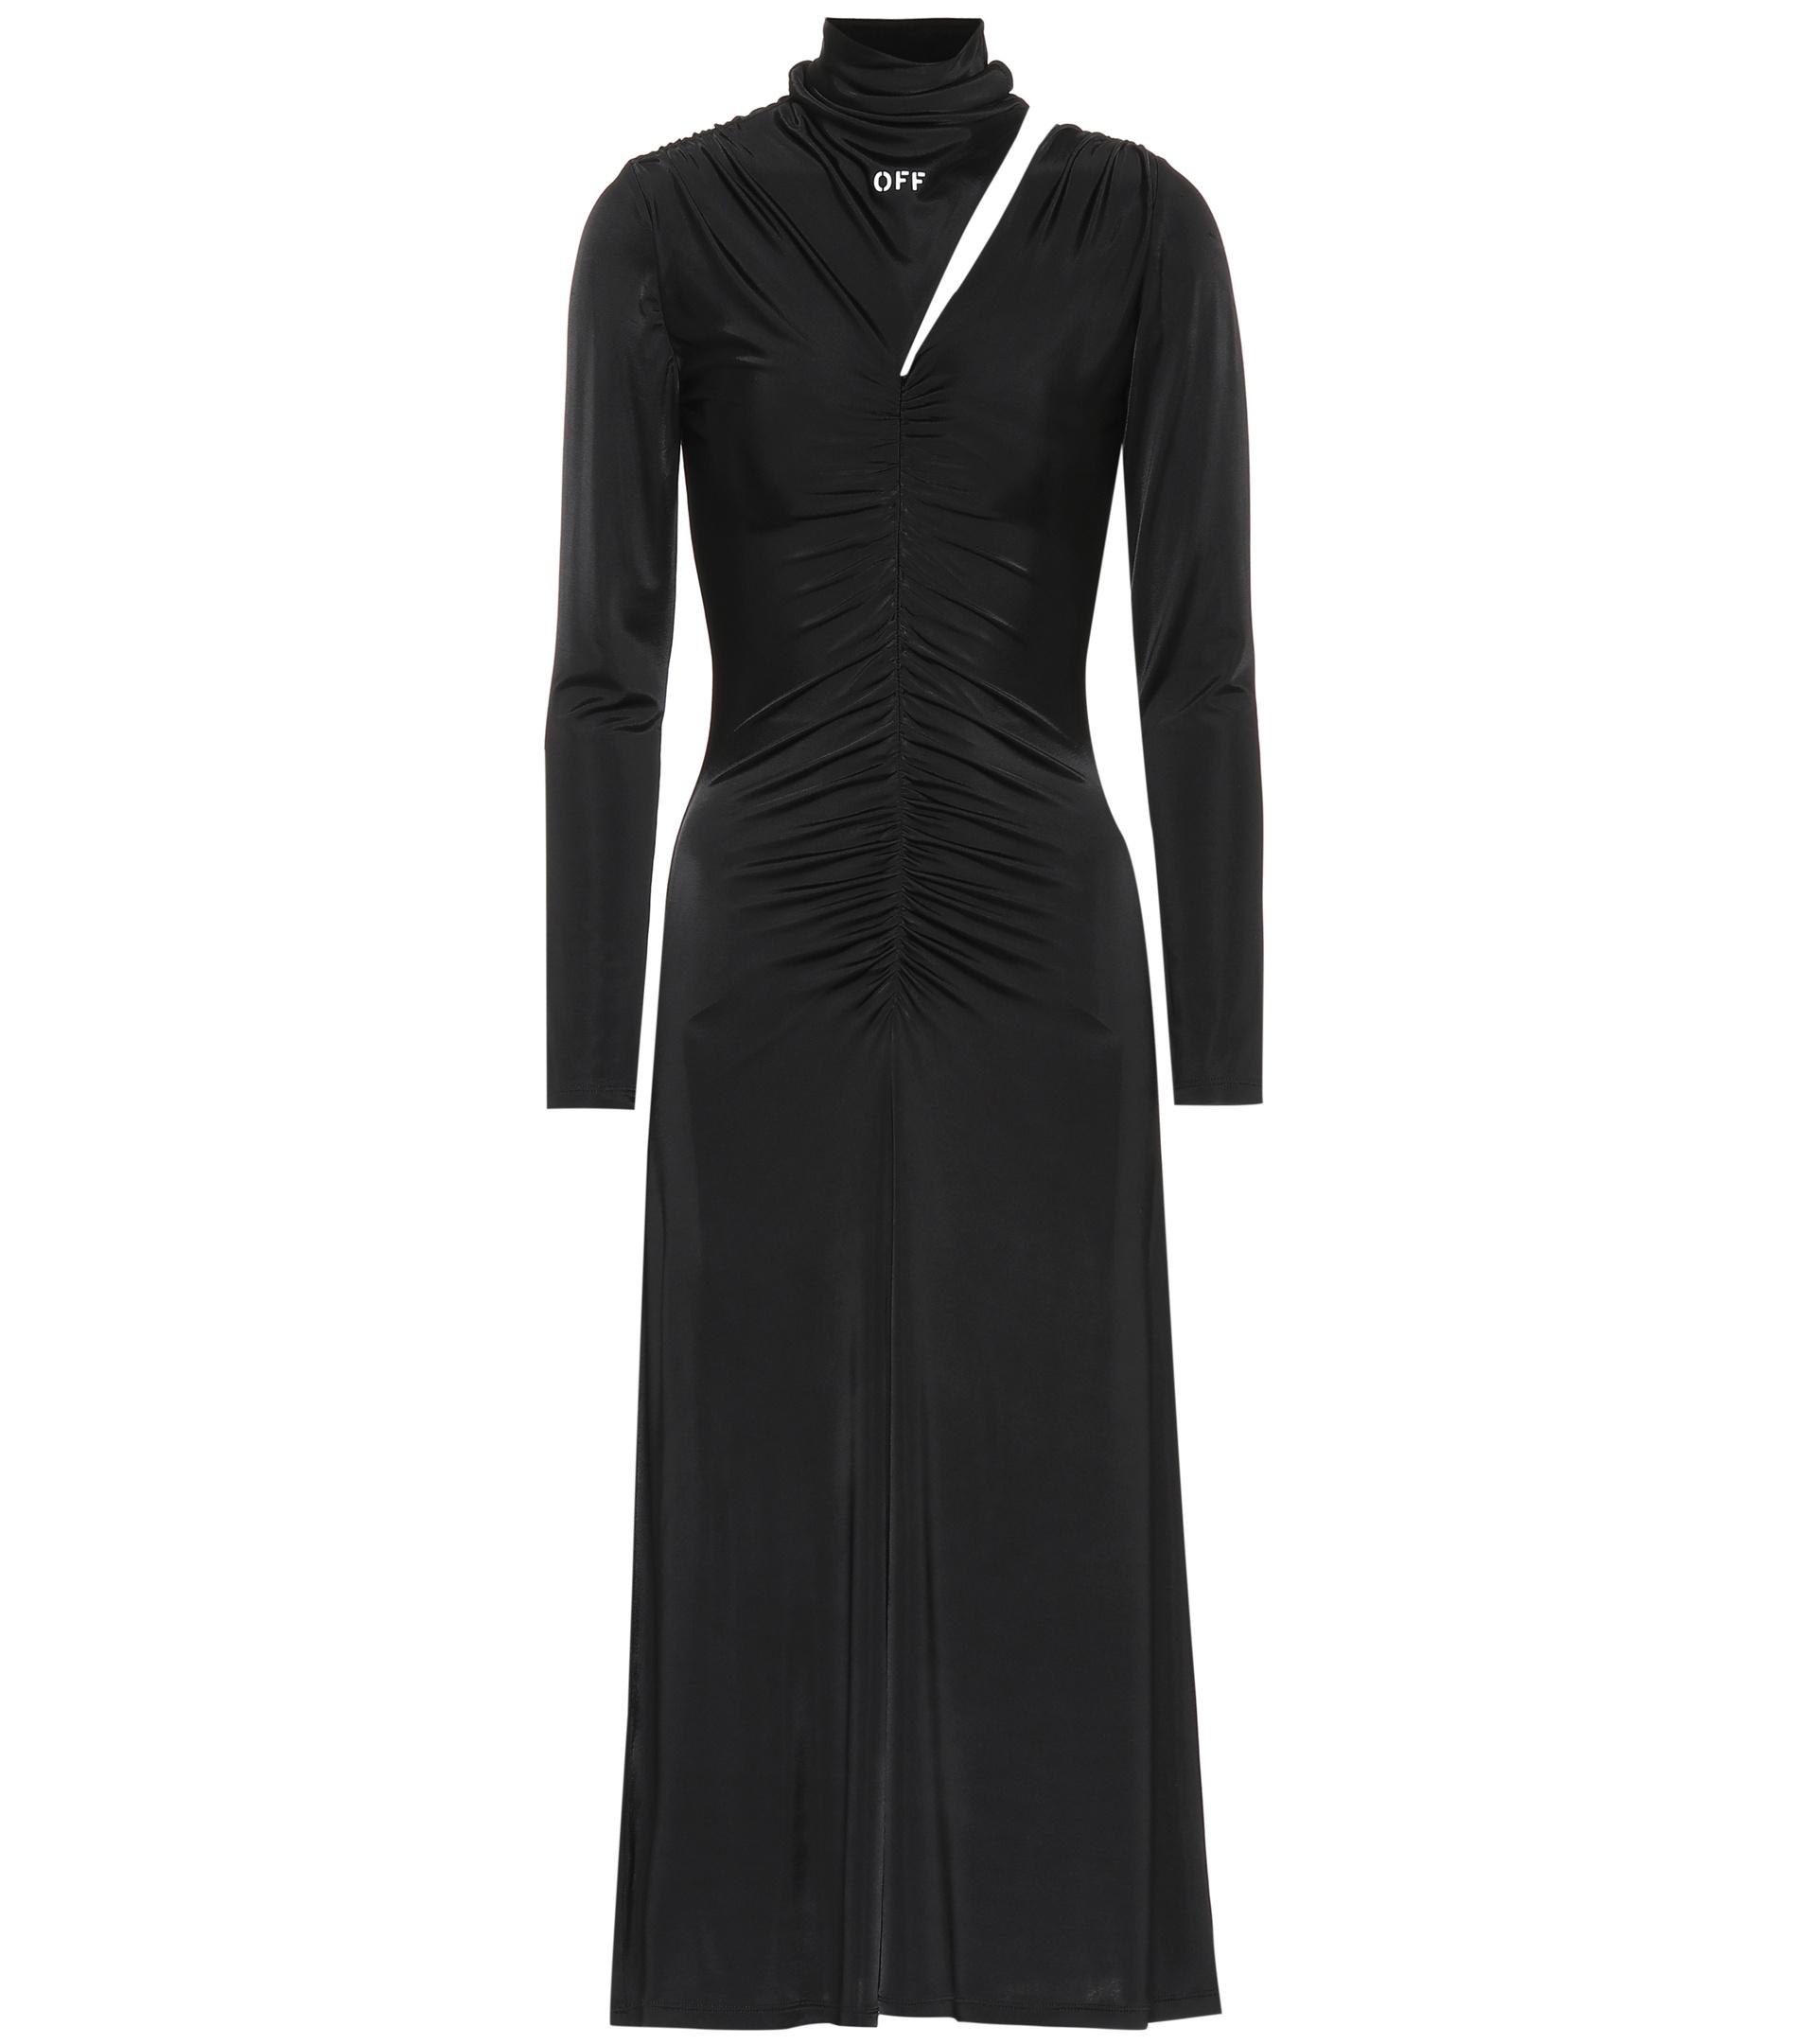 Off-White c/o Virgil Abloh Gathered Midi Dress in Black - Lyst